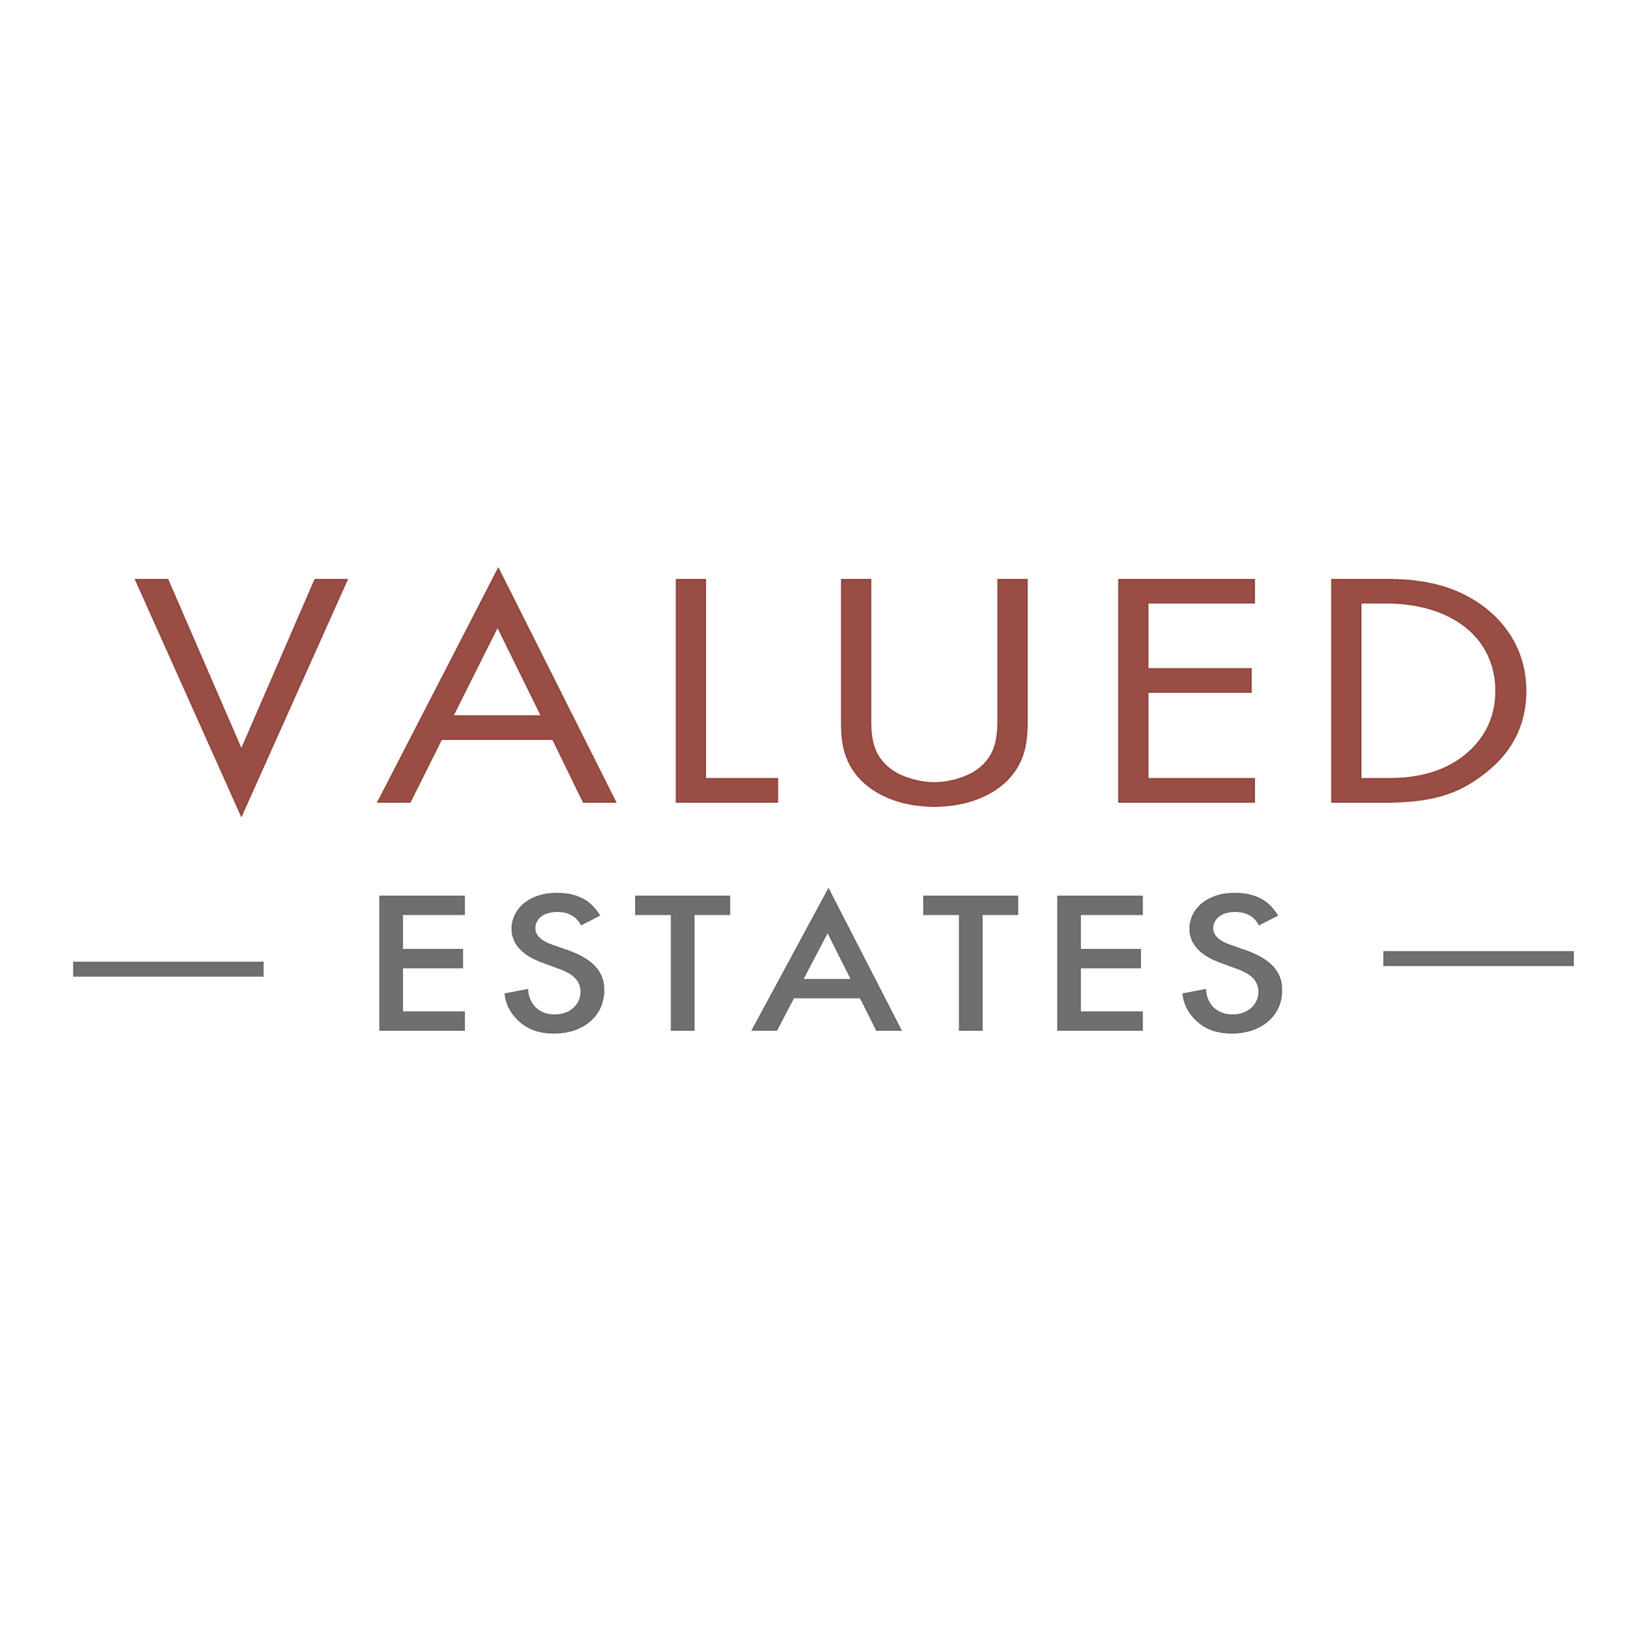 valued-estates-v2